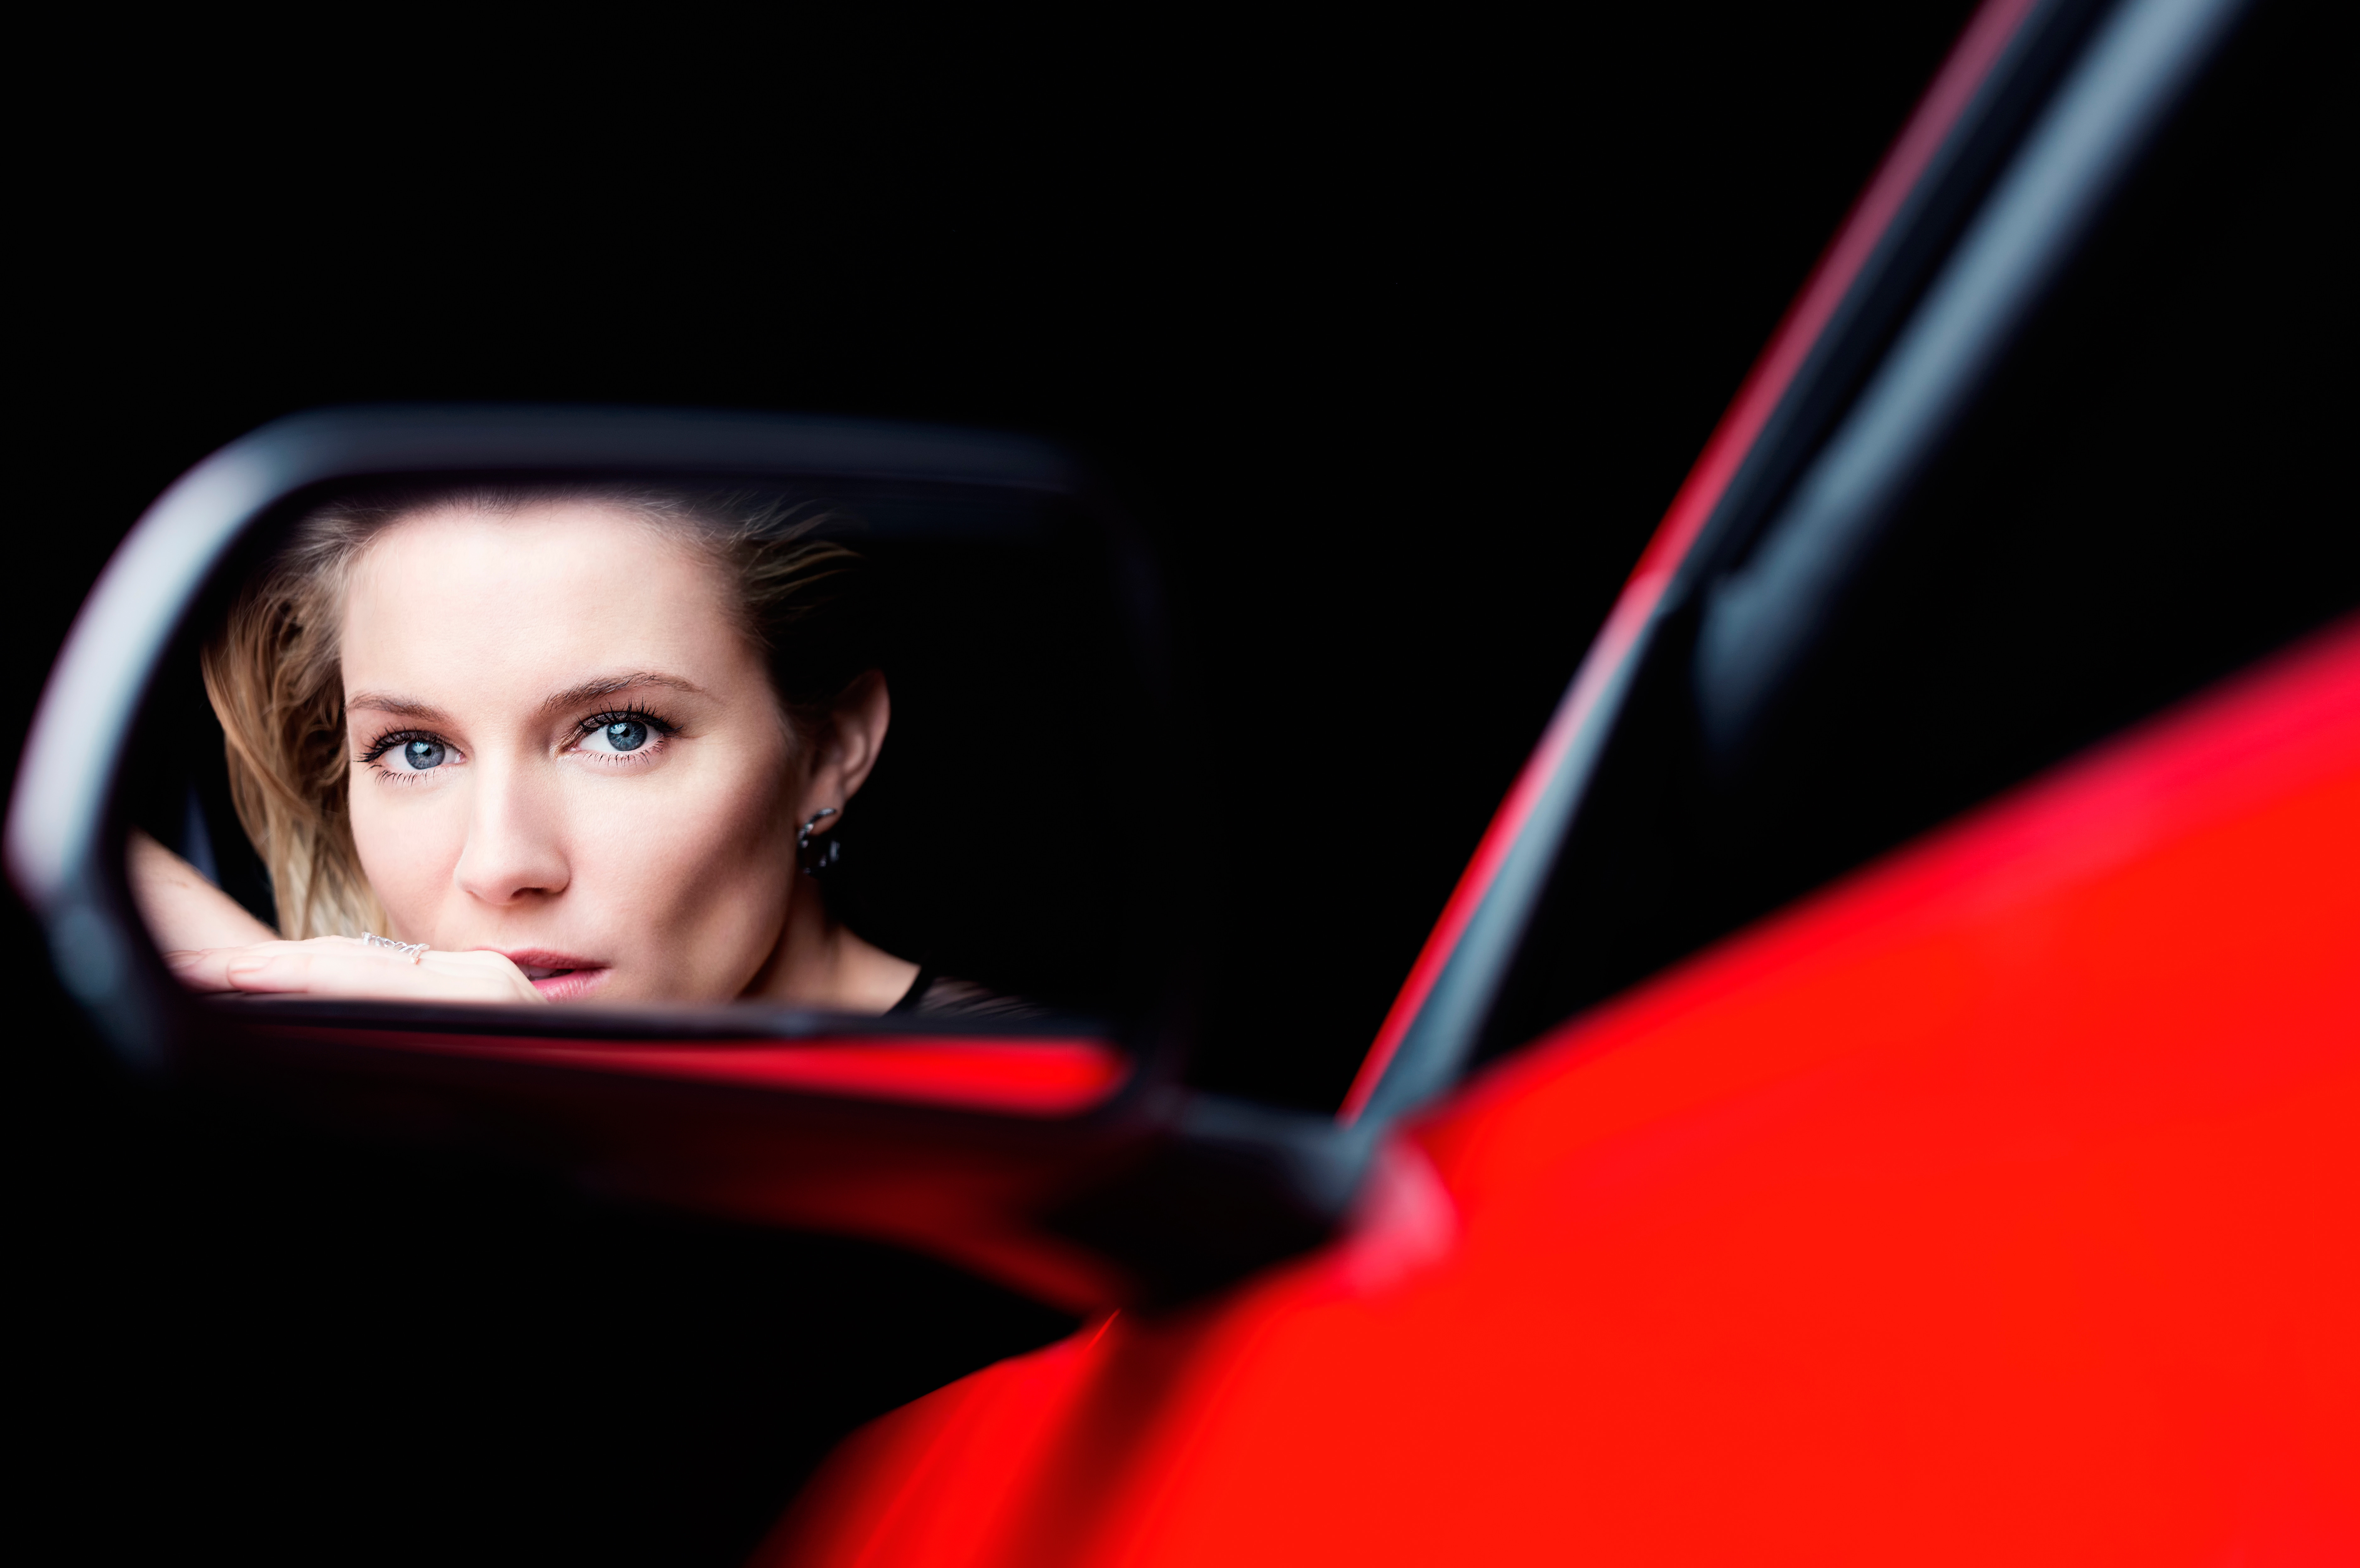 Wallpaper Sienna Miller, Actress, red, car, reflection, mirror, Celebrities #9647512 x 4992